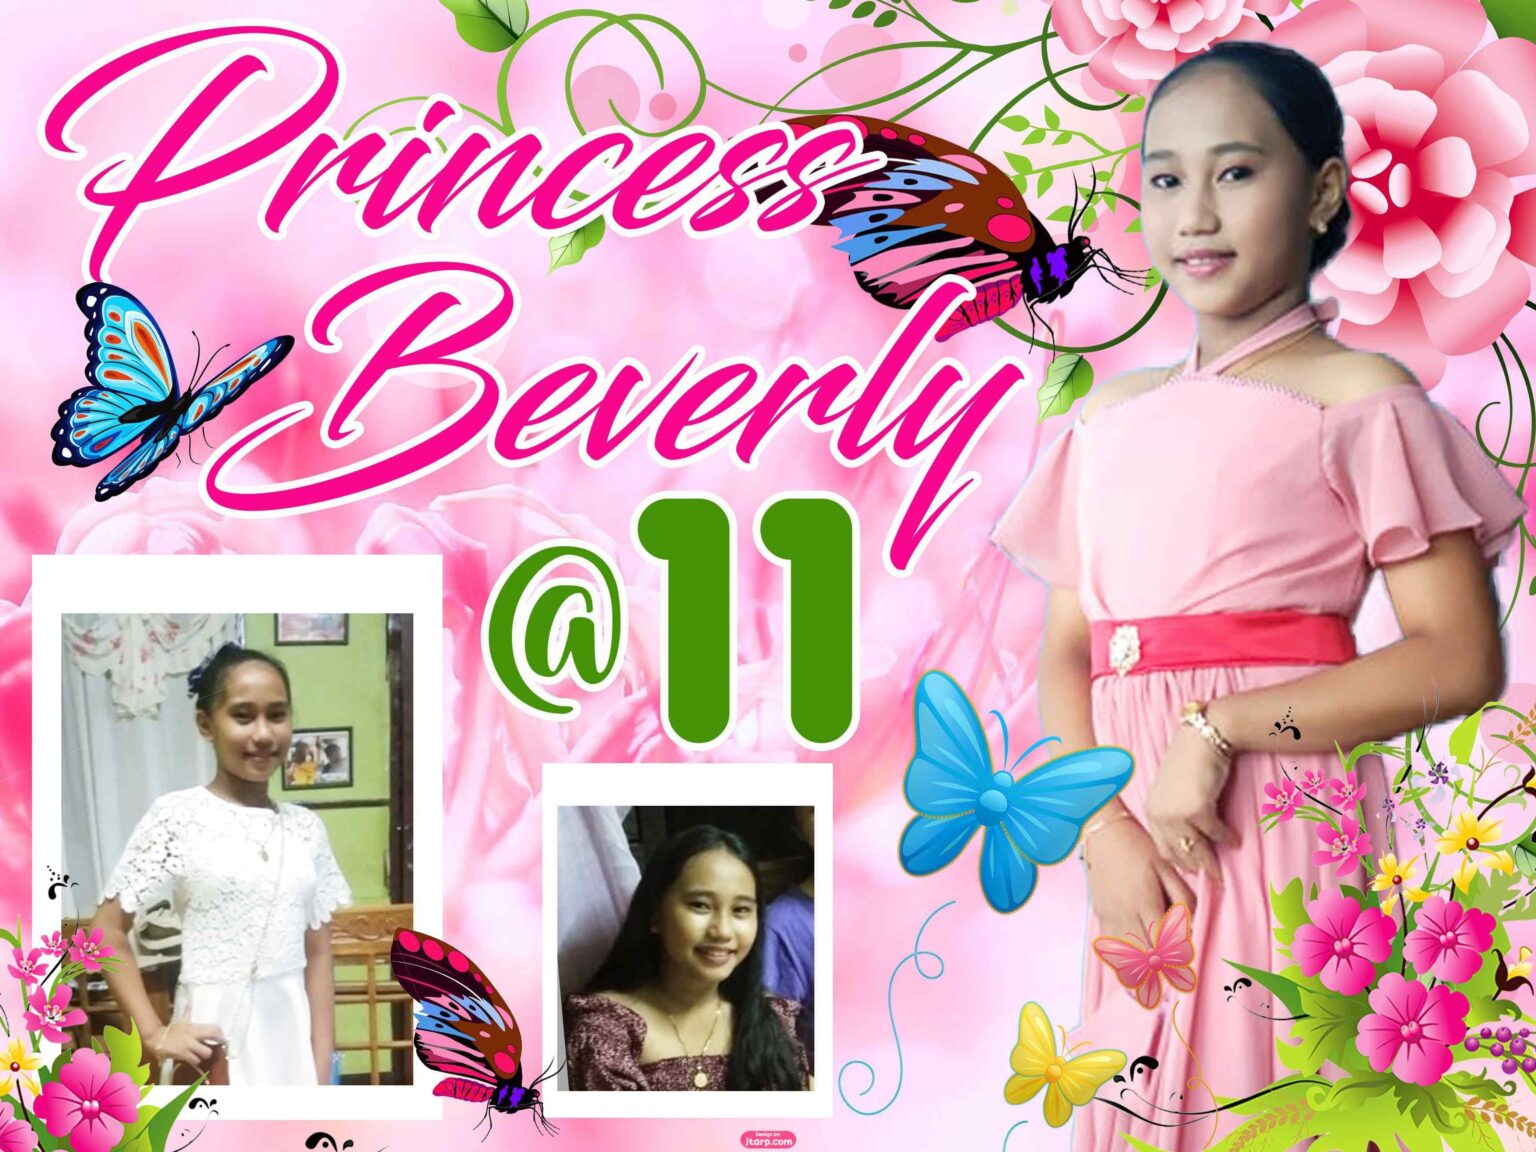 3x4 Princess Beverly @11